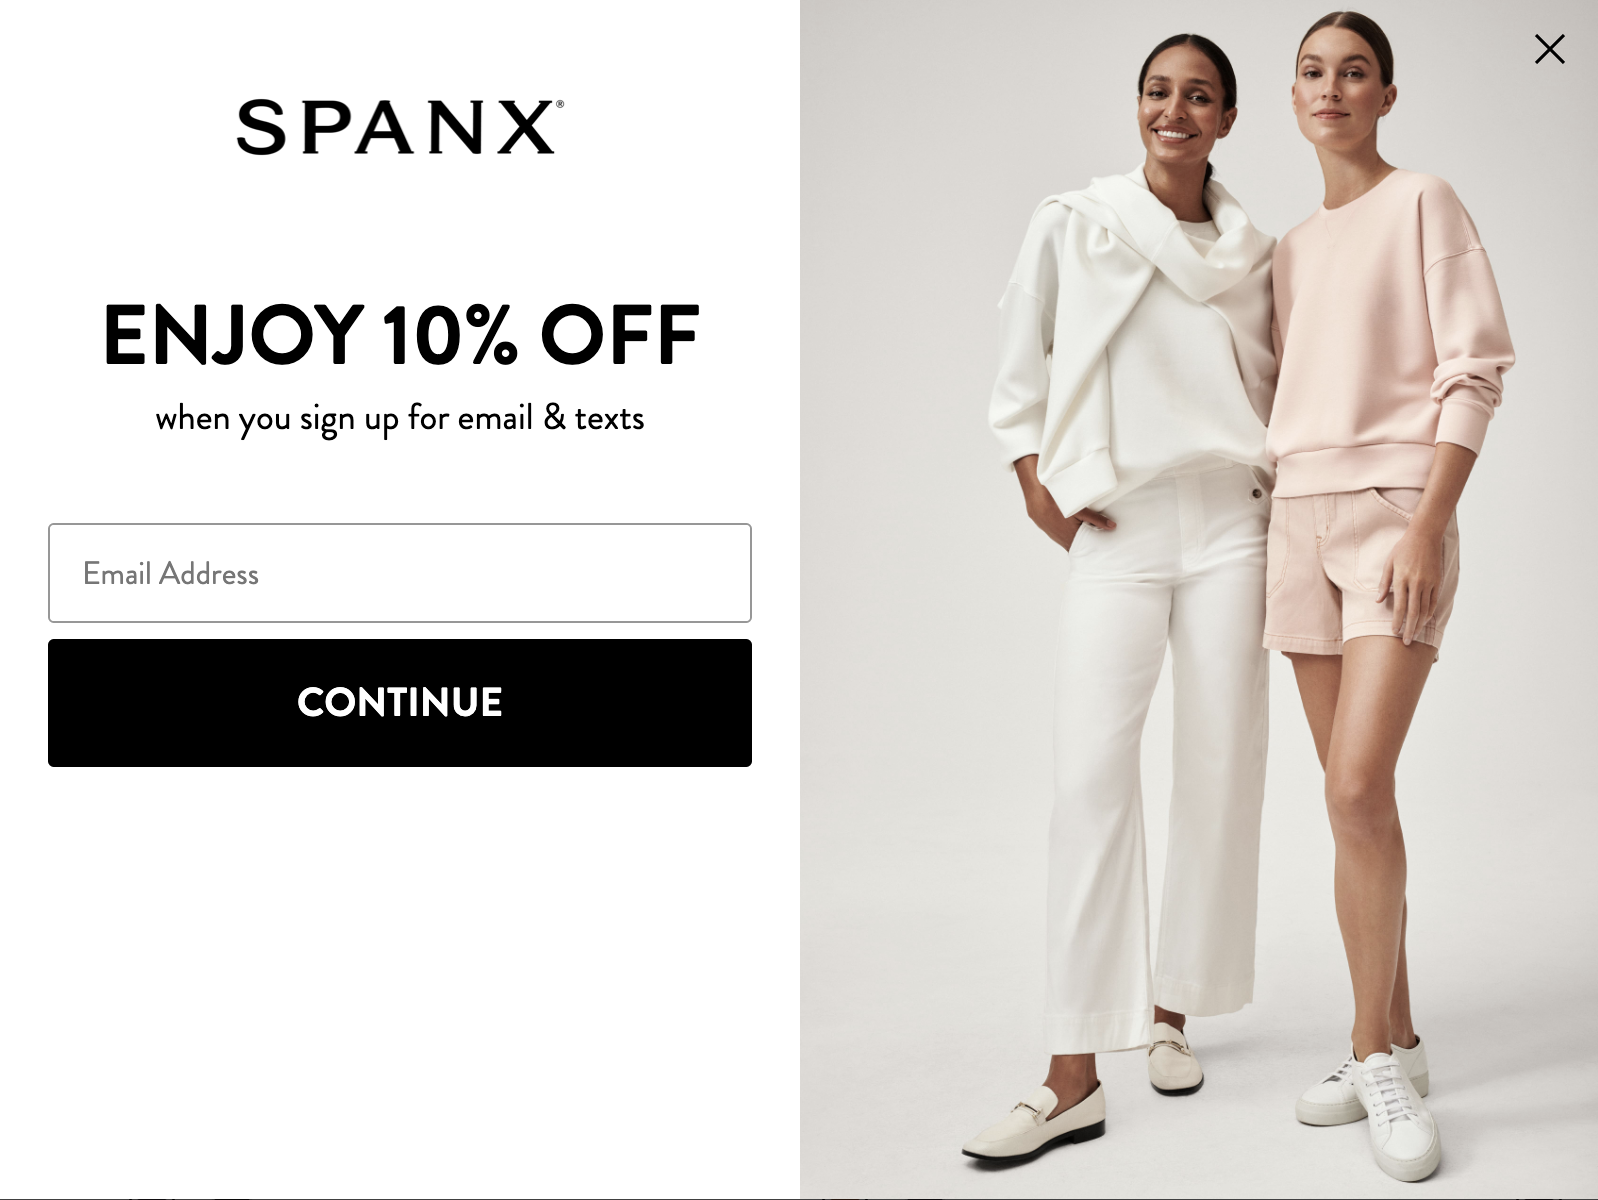 Spanx exclusive discounts